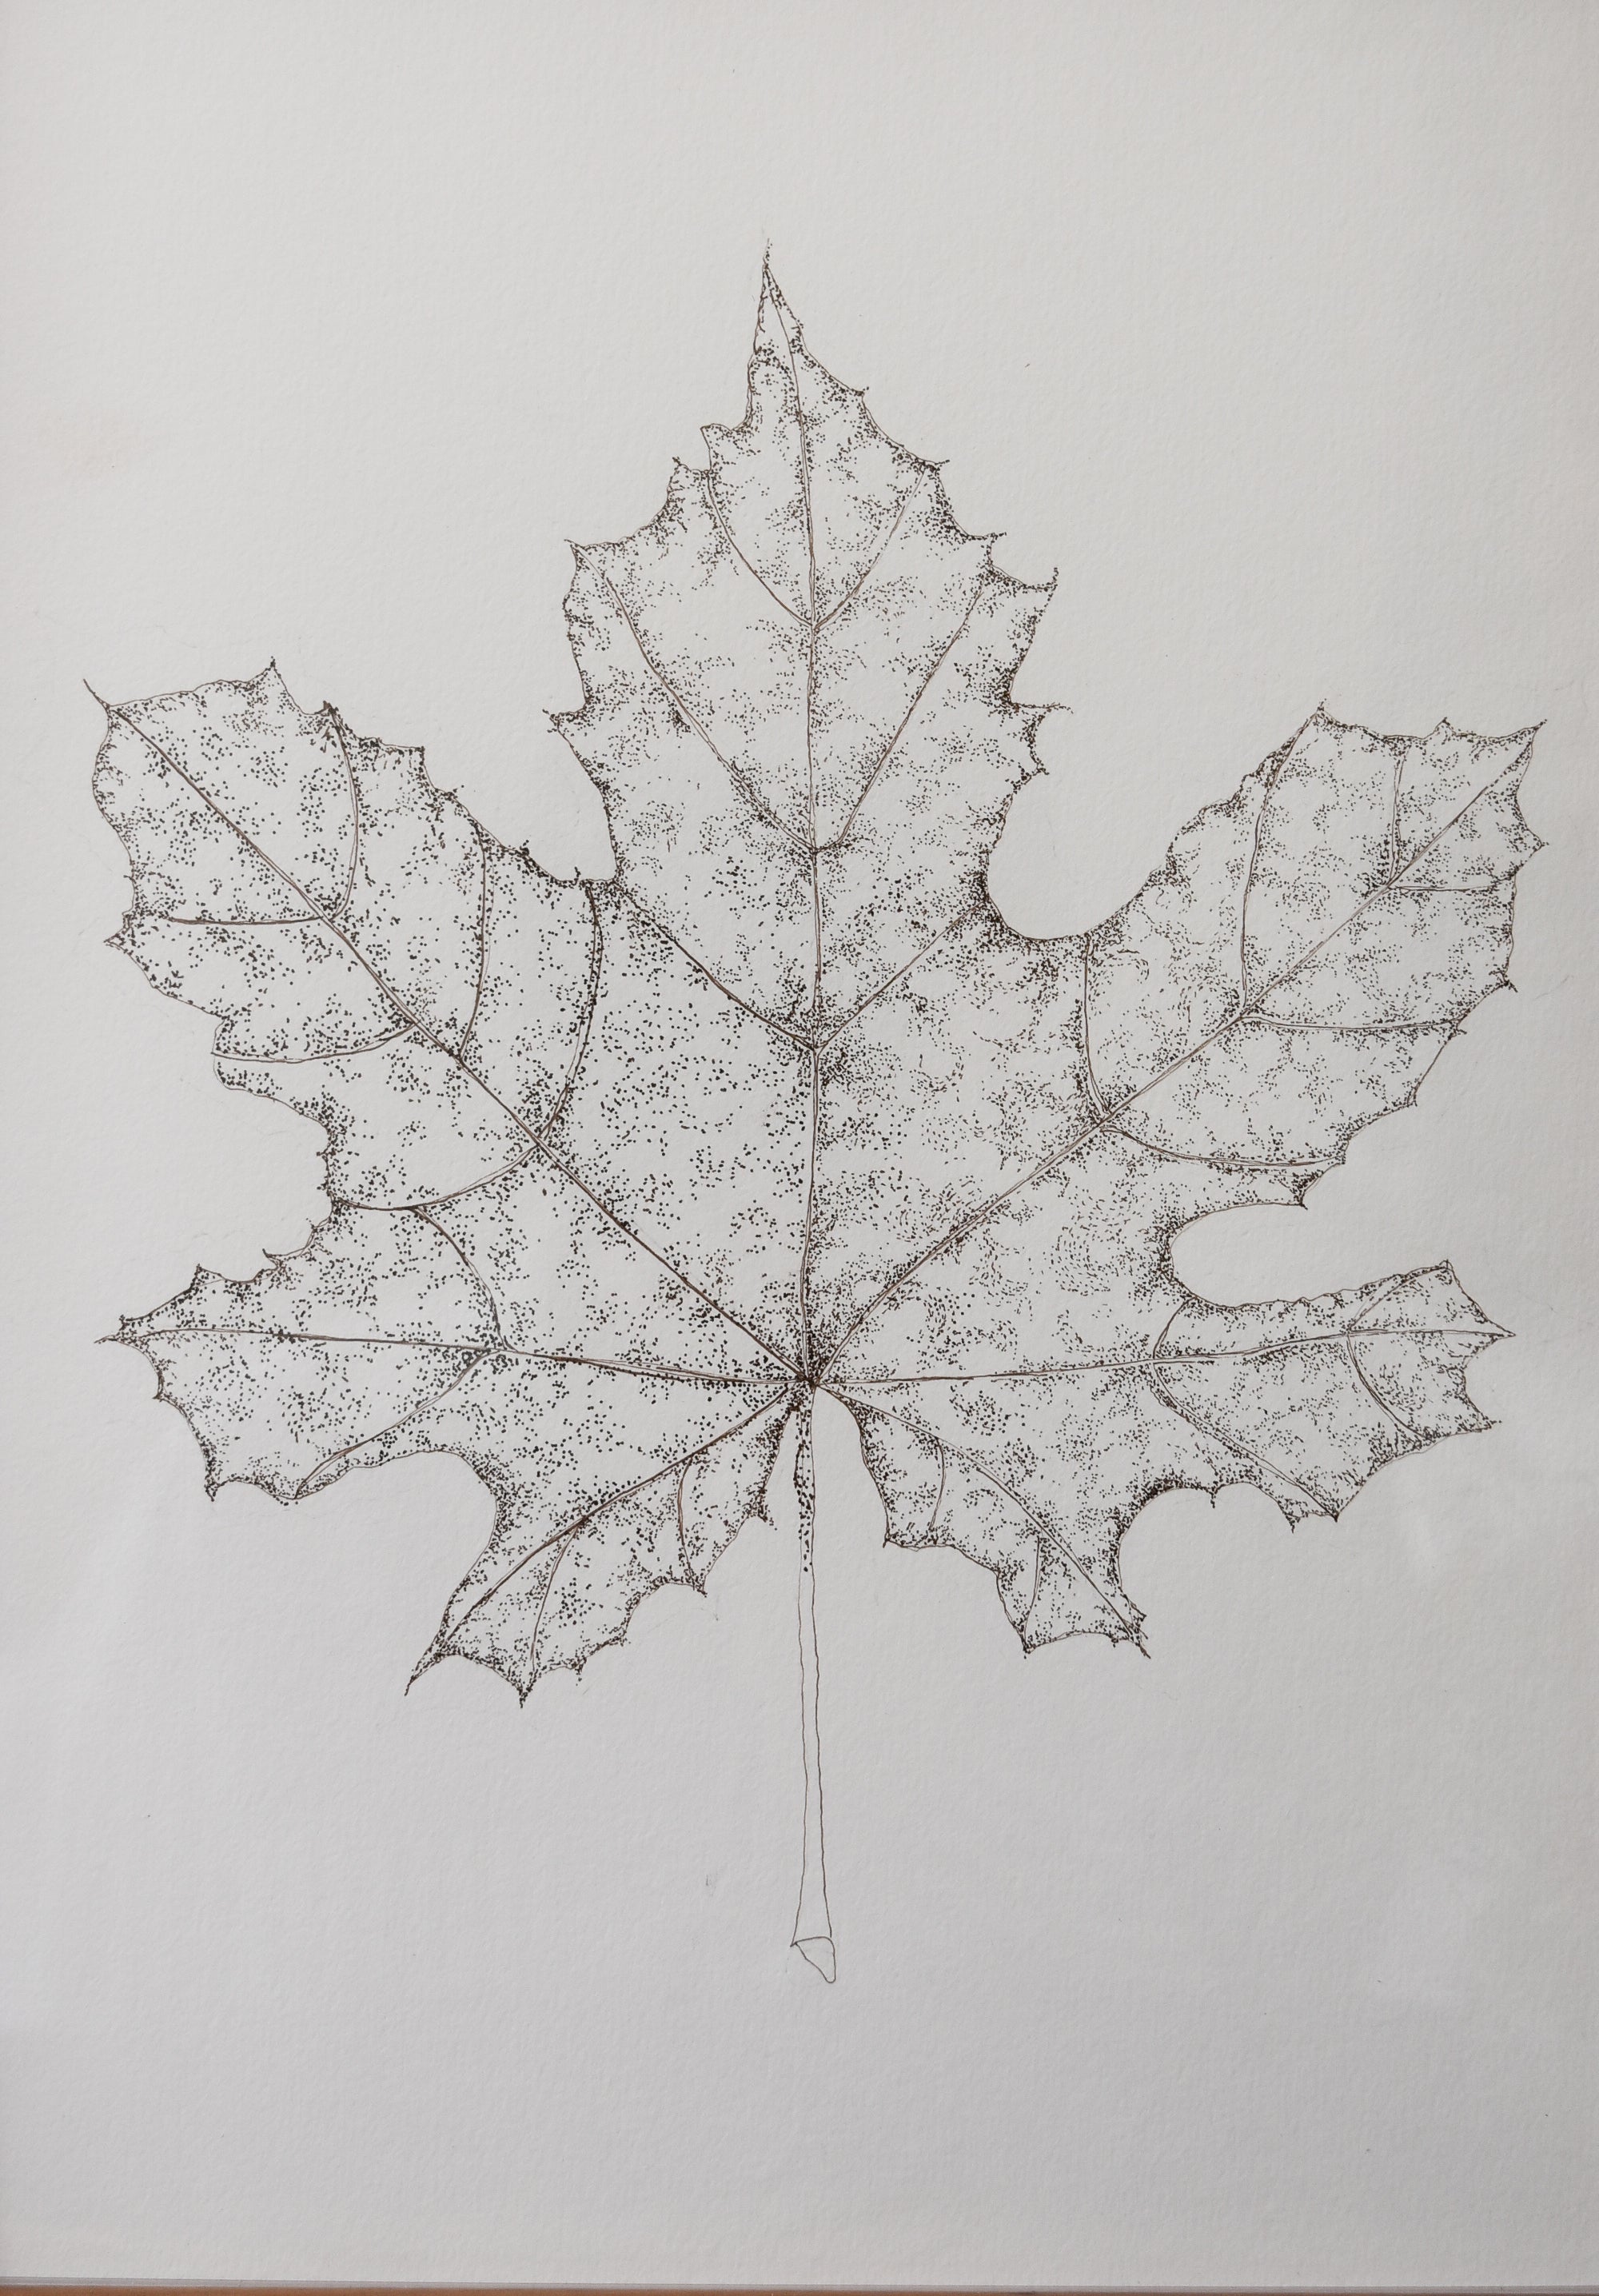 Original Monochromatic Leaf Sketch No. 3 by Melody Trivisone